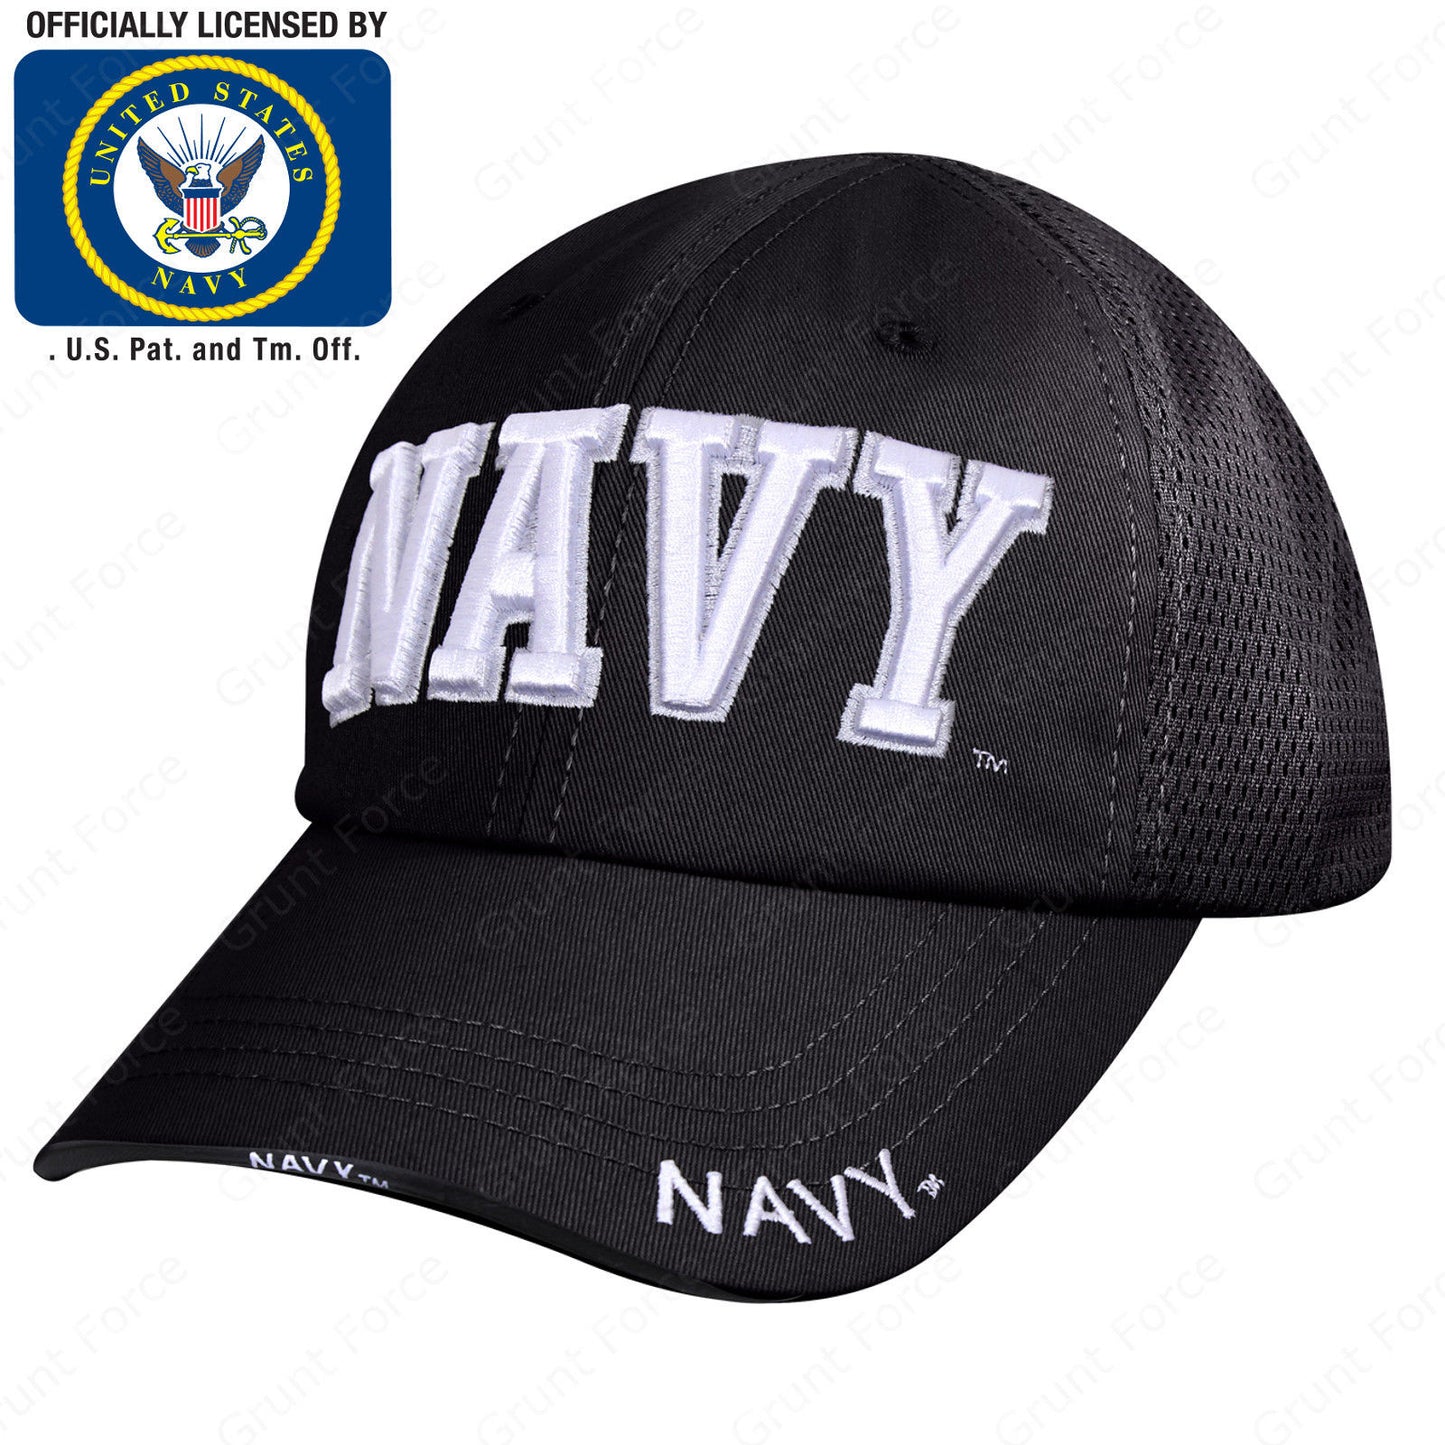 Black "NAVY" Mesh Back Tactical Cap - 6 Panel Low-Mid Profile Strapback Hat